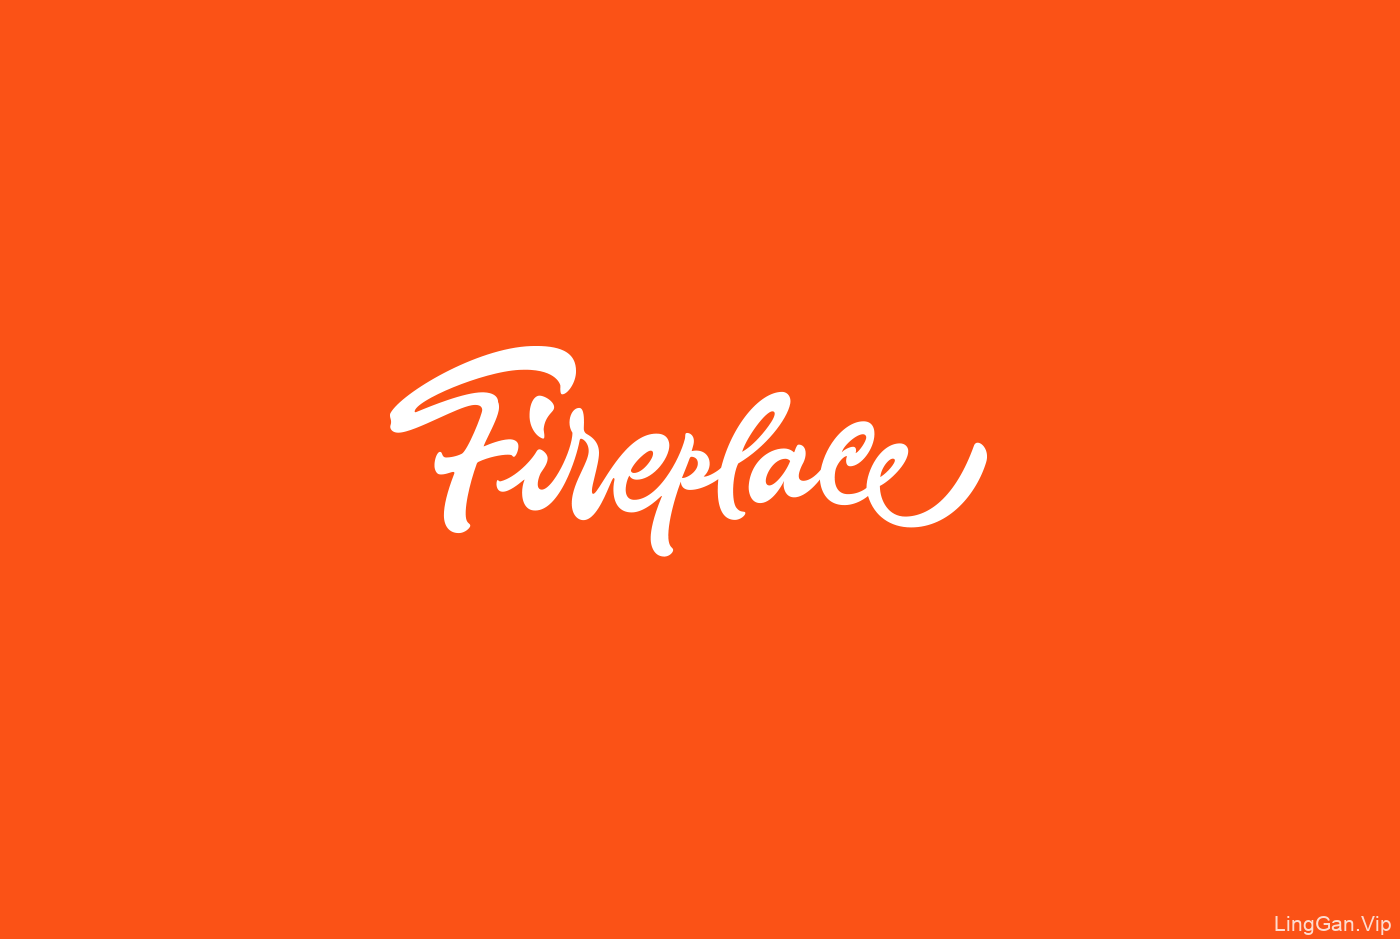 Fireplace 国外文字创意logo